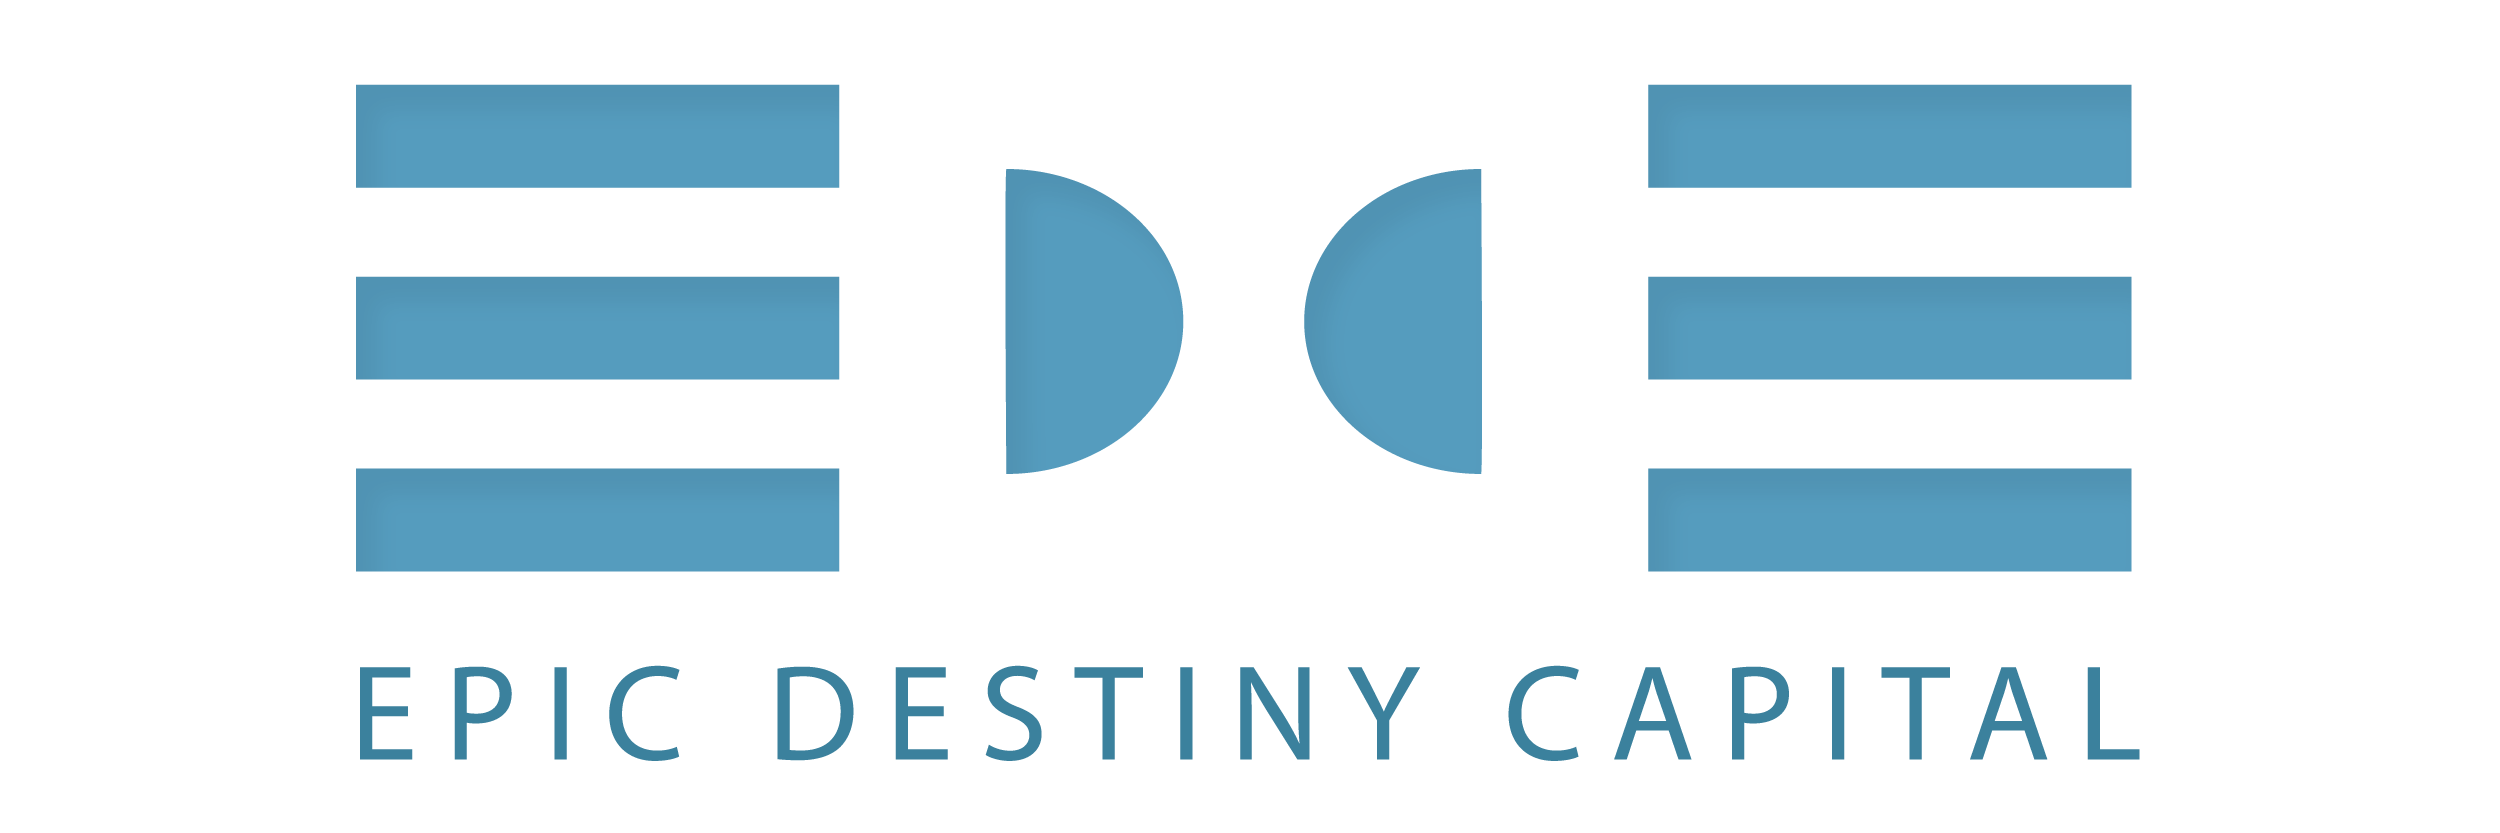 Epic Destiny Capital